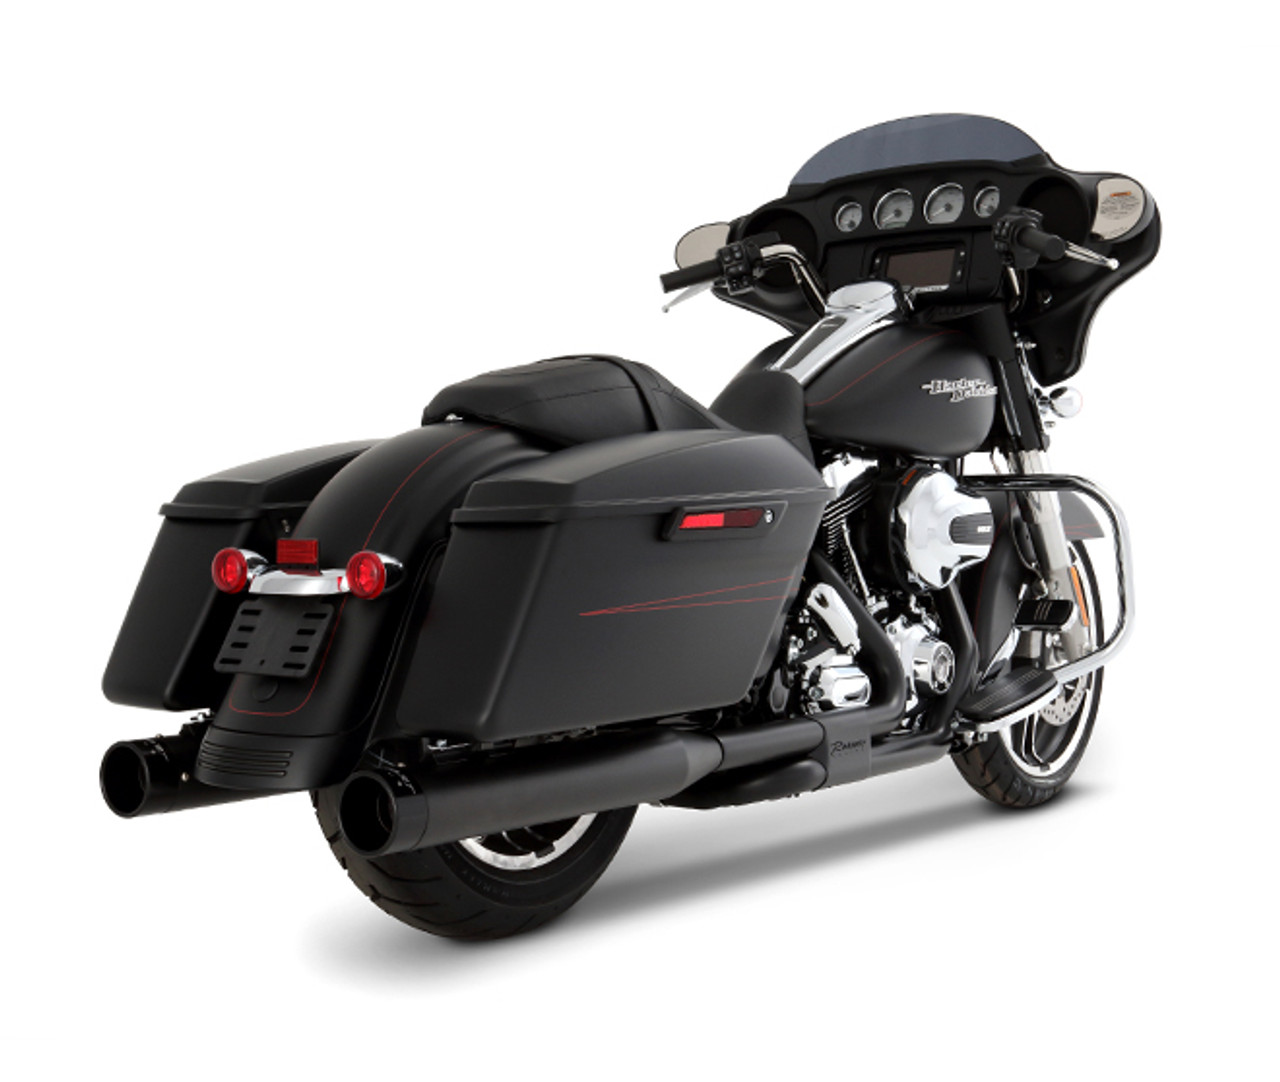 Rinehart Racing 4 inch Slimline Duals Exhaust System for Harley